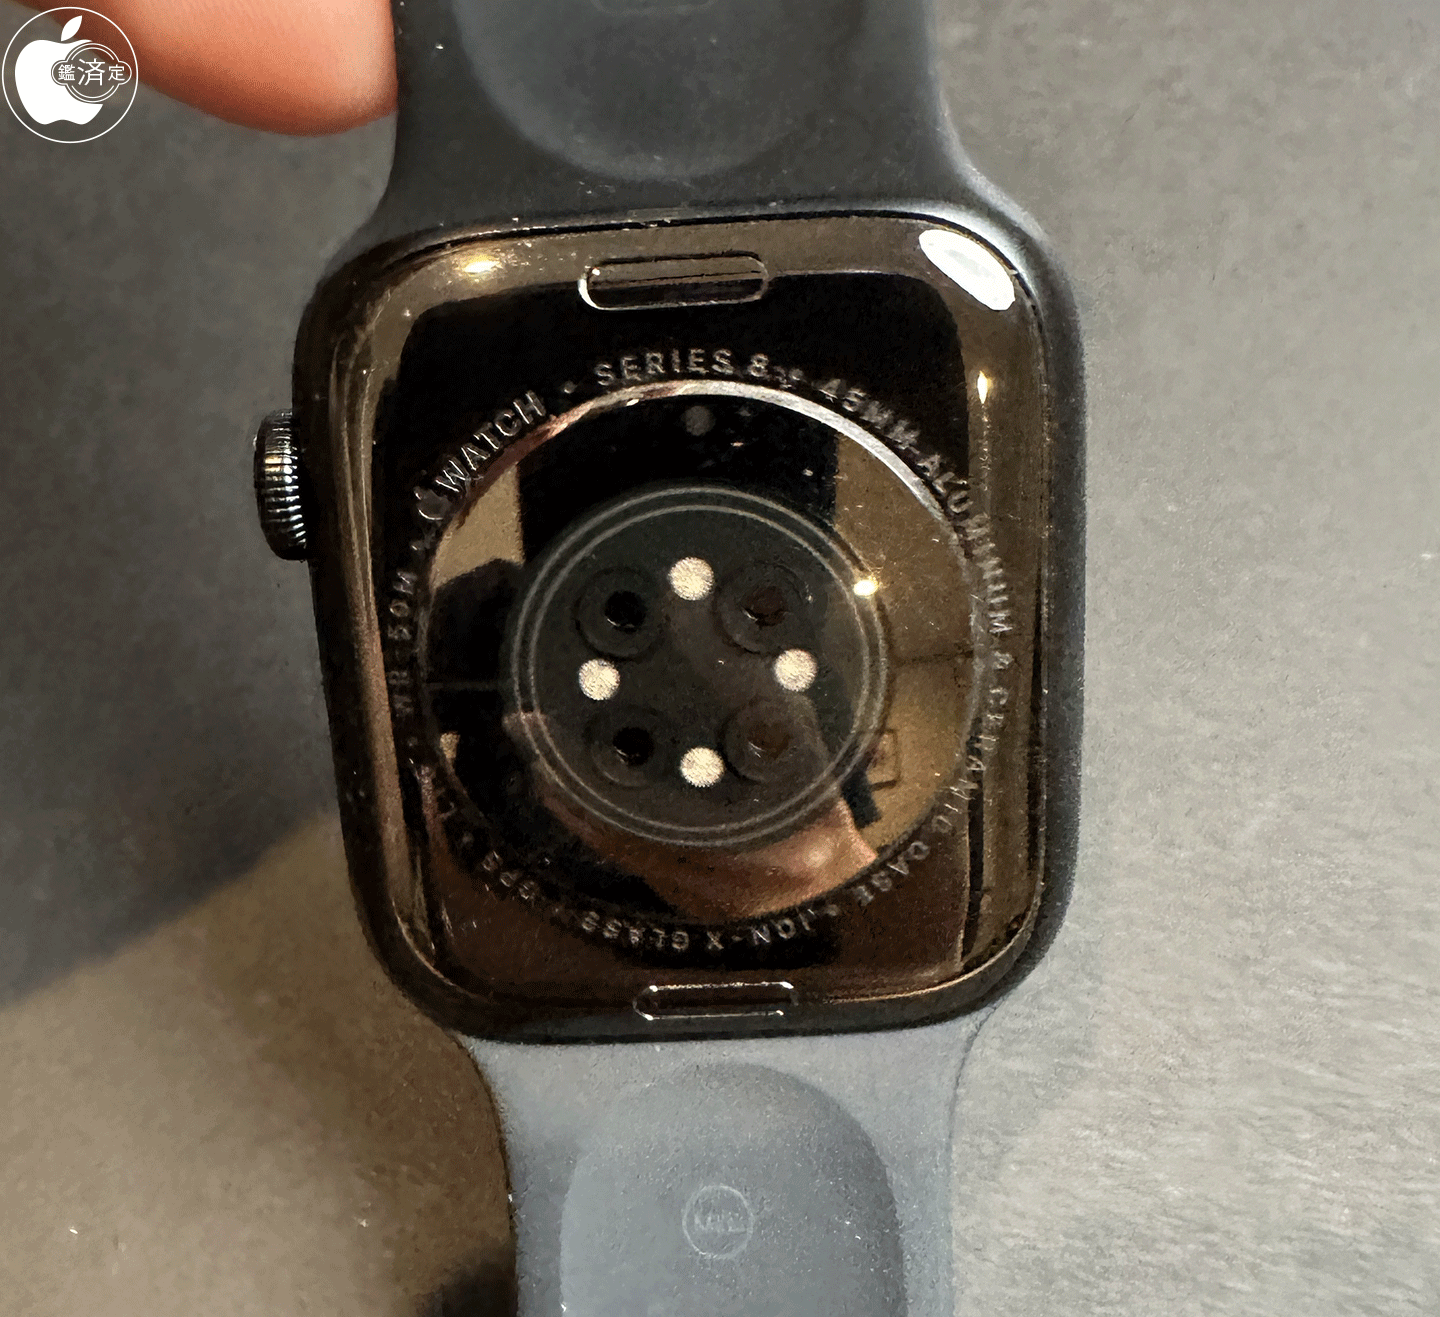 Apple Watch Series 8をチェック | Watch | Mac OTAKARA